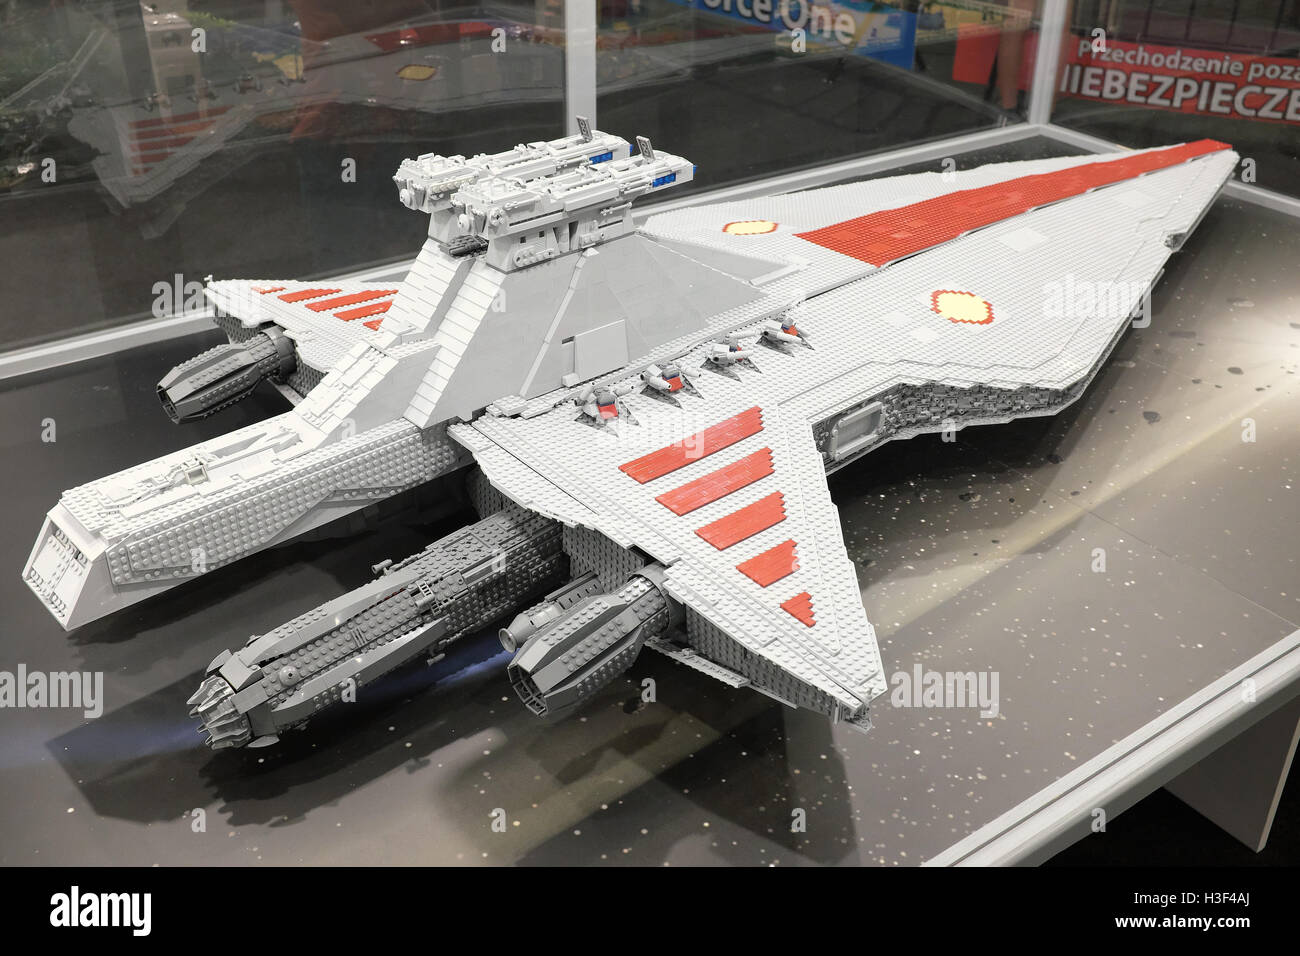 Lego blocks spaceship from Star Wars on exhibition i Rzeszow, Poland Stock Photo